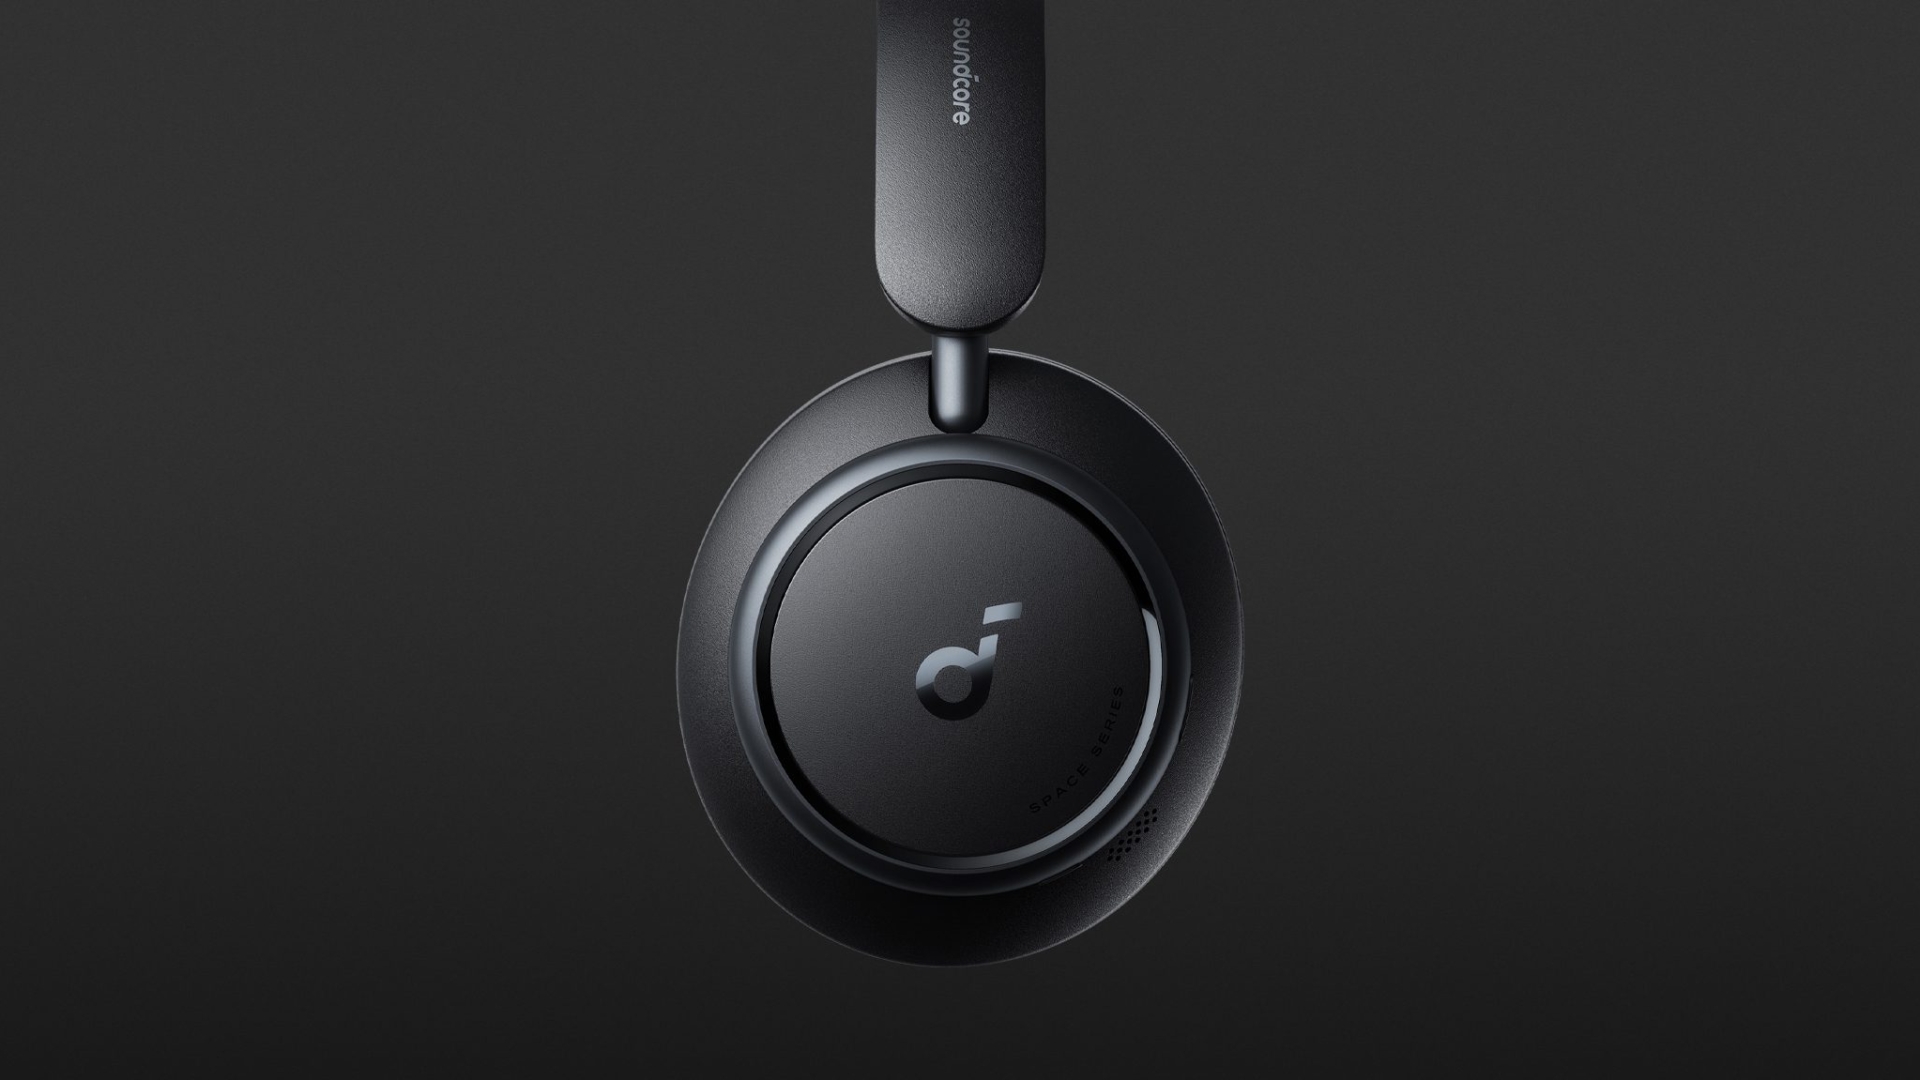 Soundcore Space Q45: Wireless full size ANC headphones